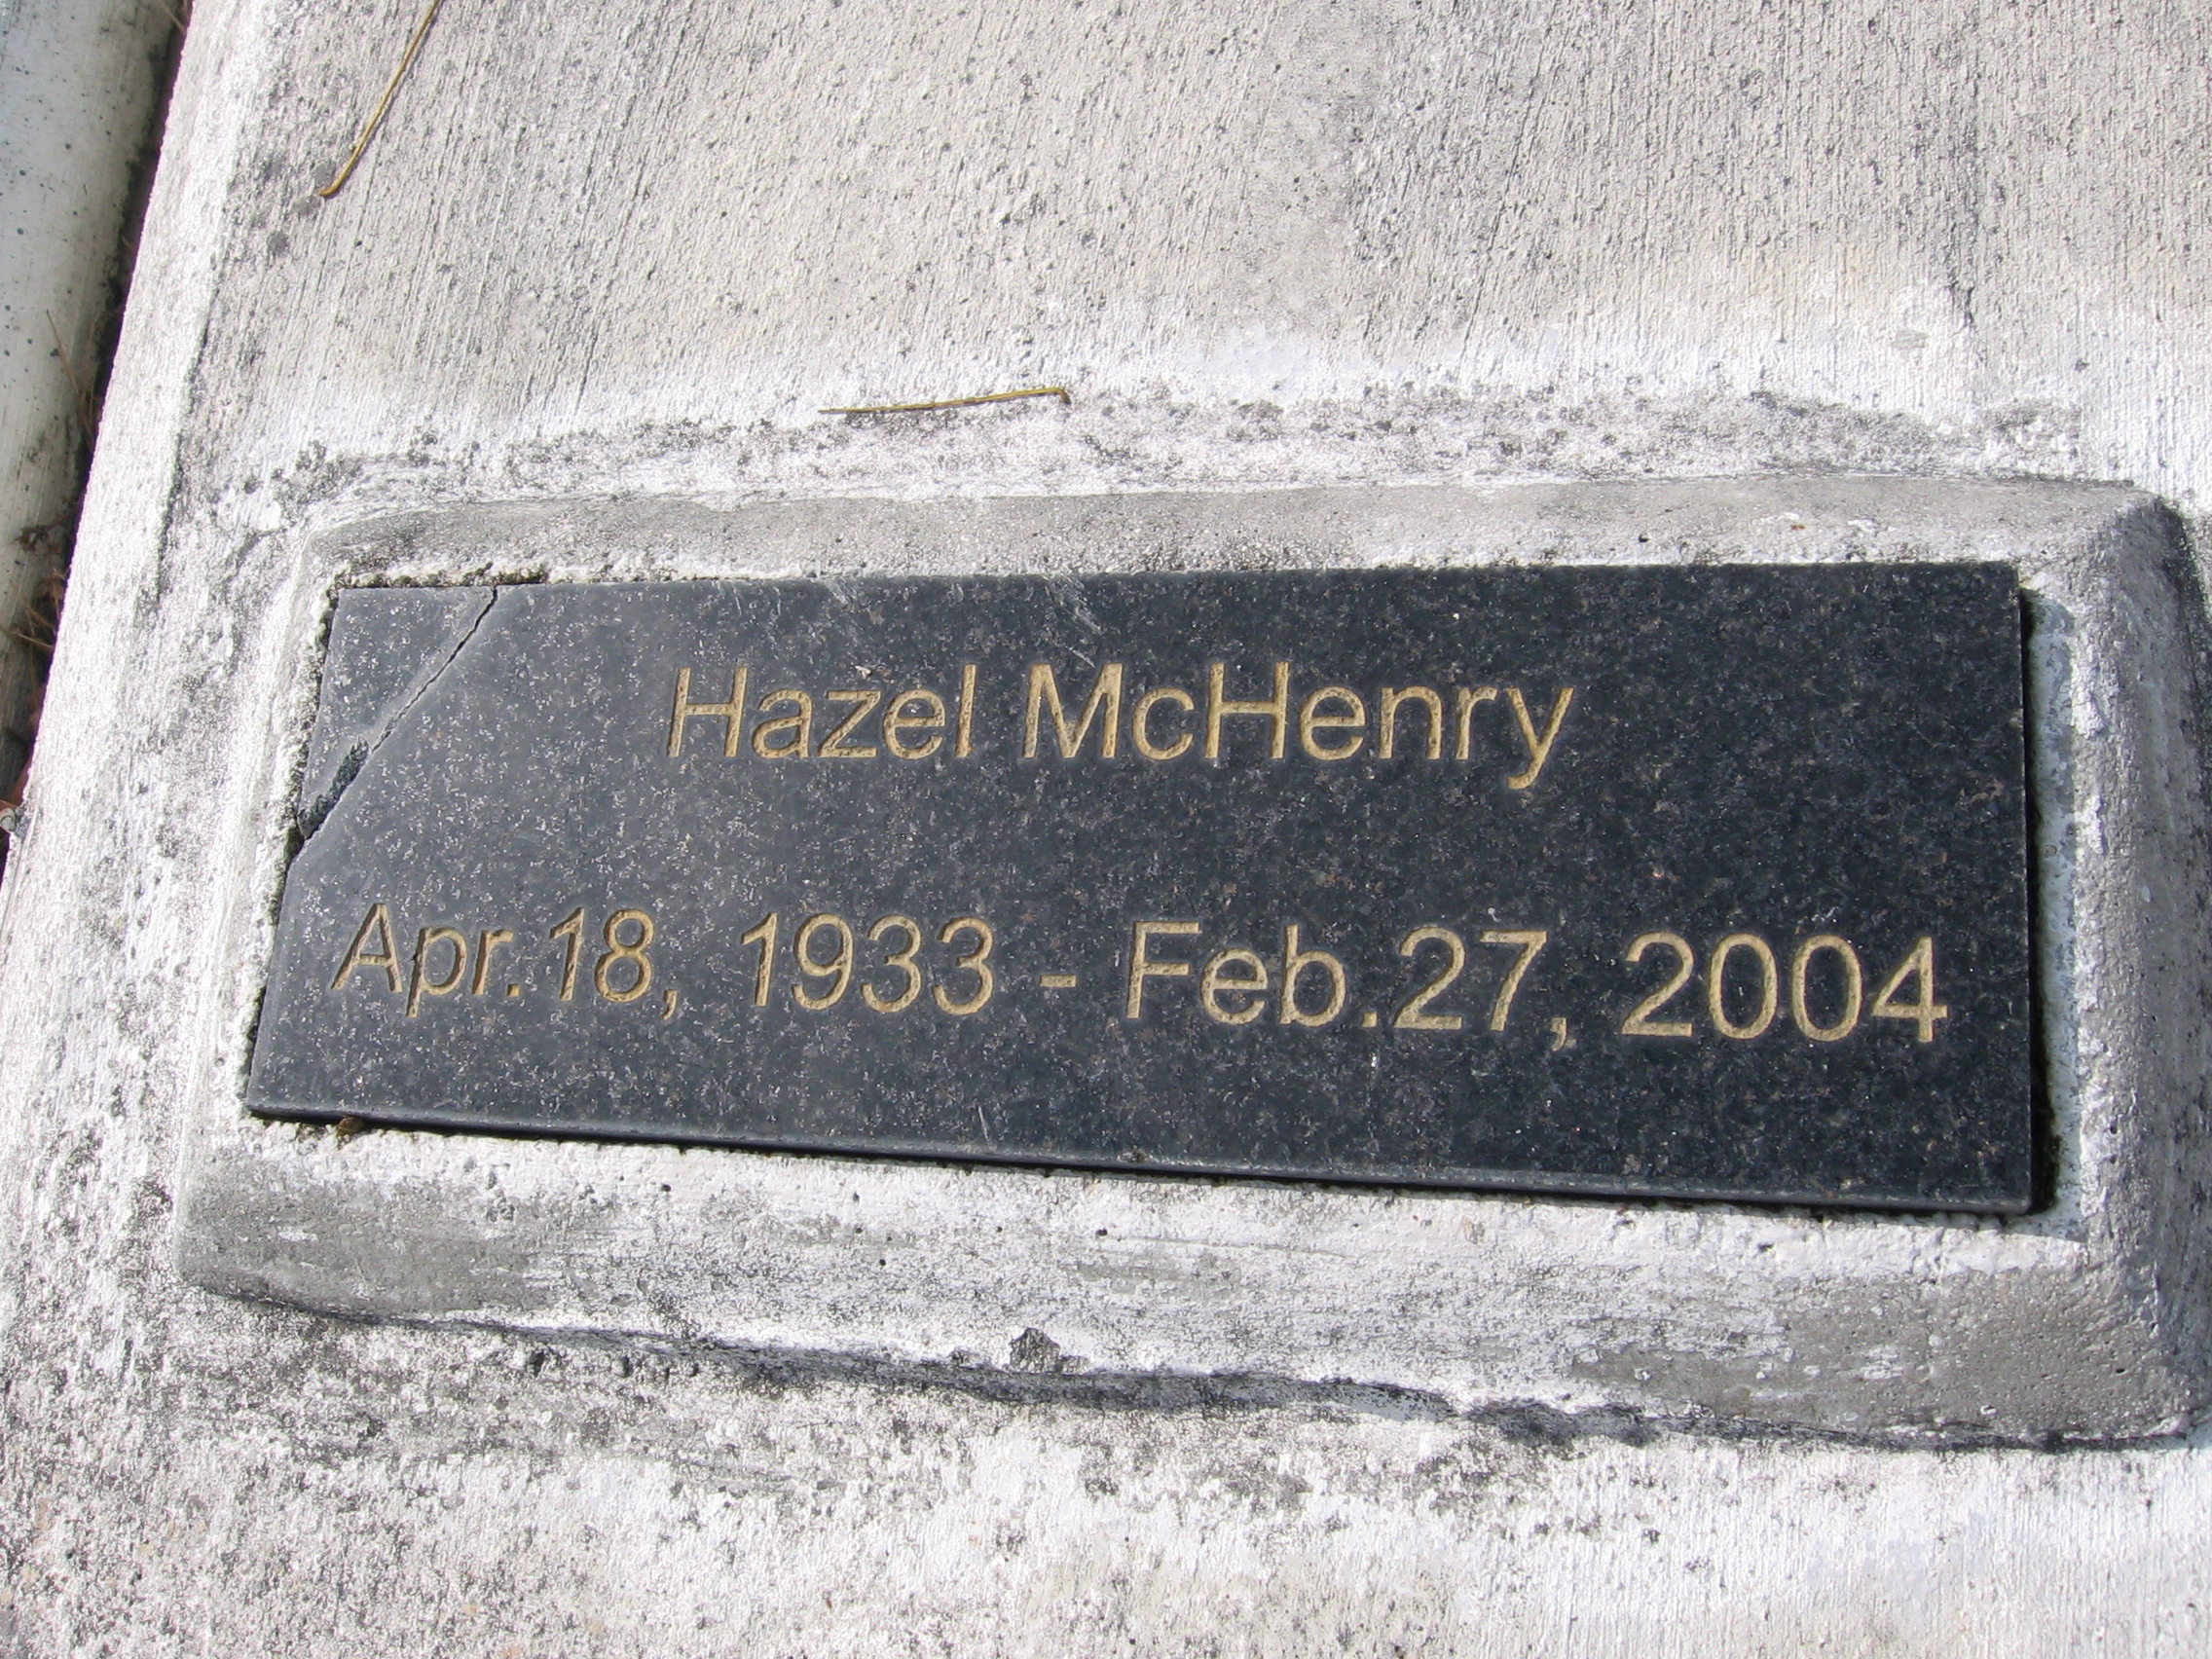 Hazel McHenry